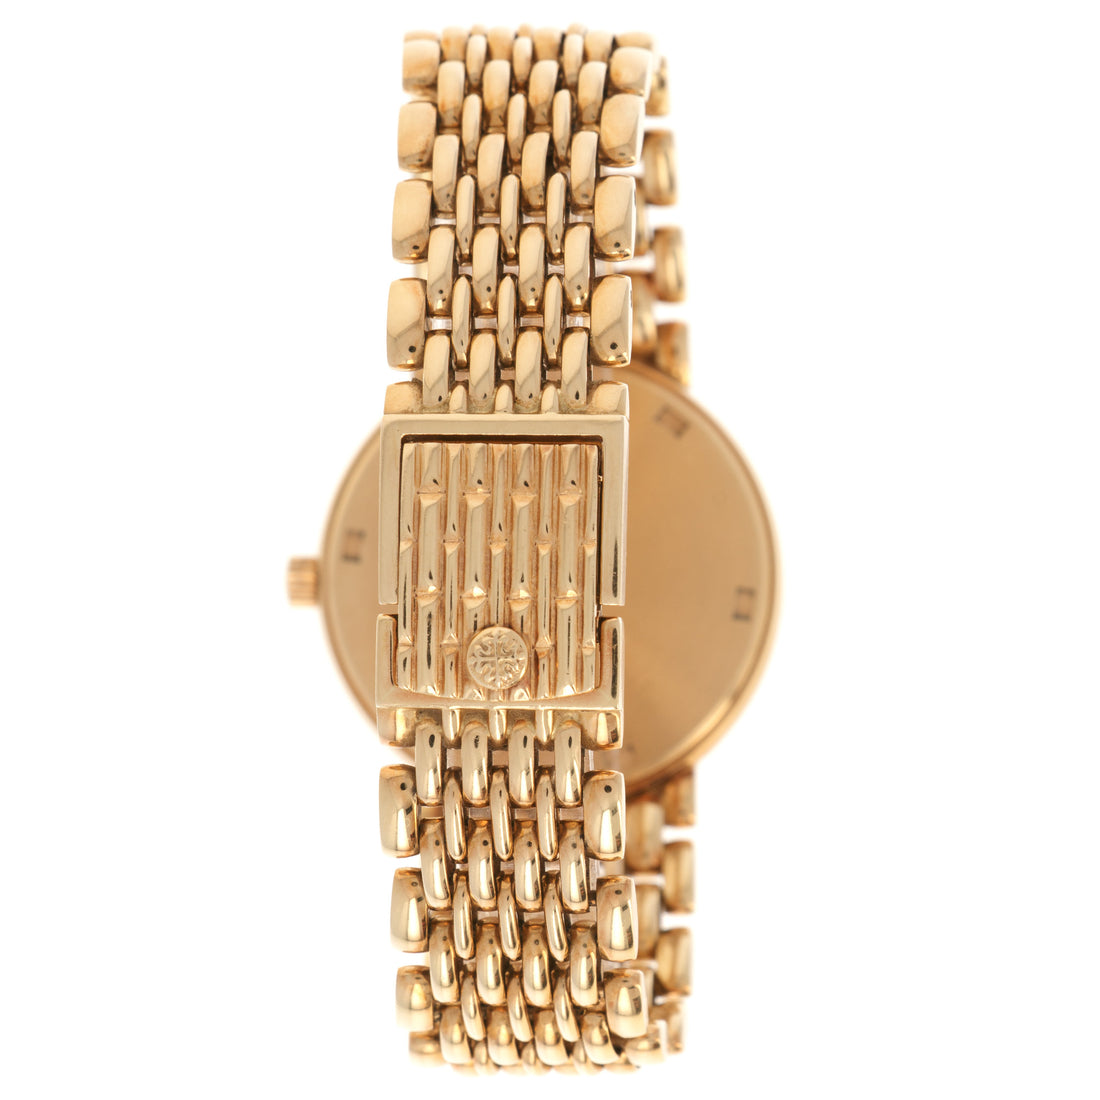 Patek Philippe Yellow Gold Calatrava Automatic Watch Ref. 3998